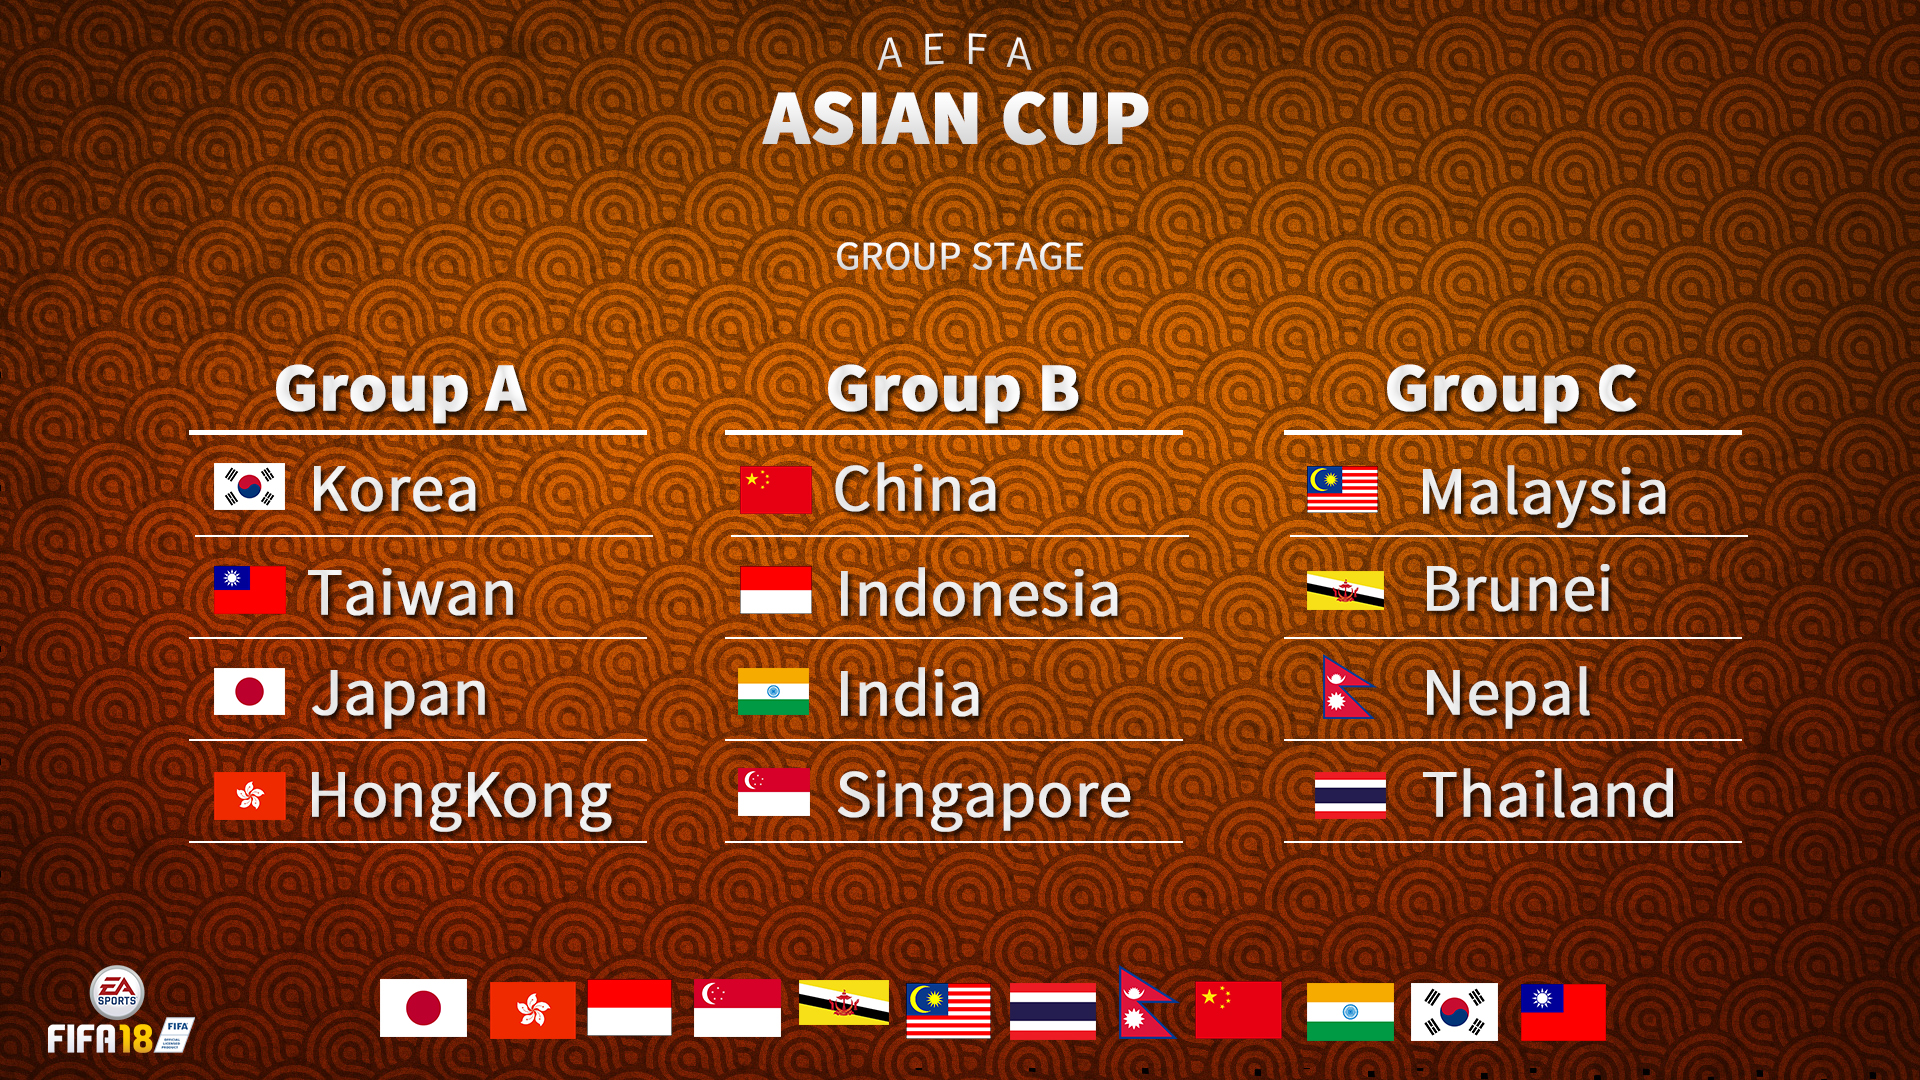 Fifa18 Aefa Asian Cupが23日開幕 Aefaジャパンチームは初日に香港 韓国と対戦 サッカーキング